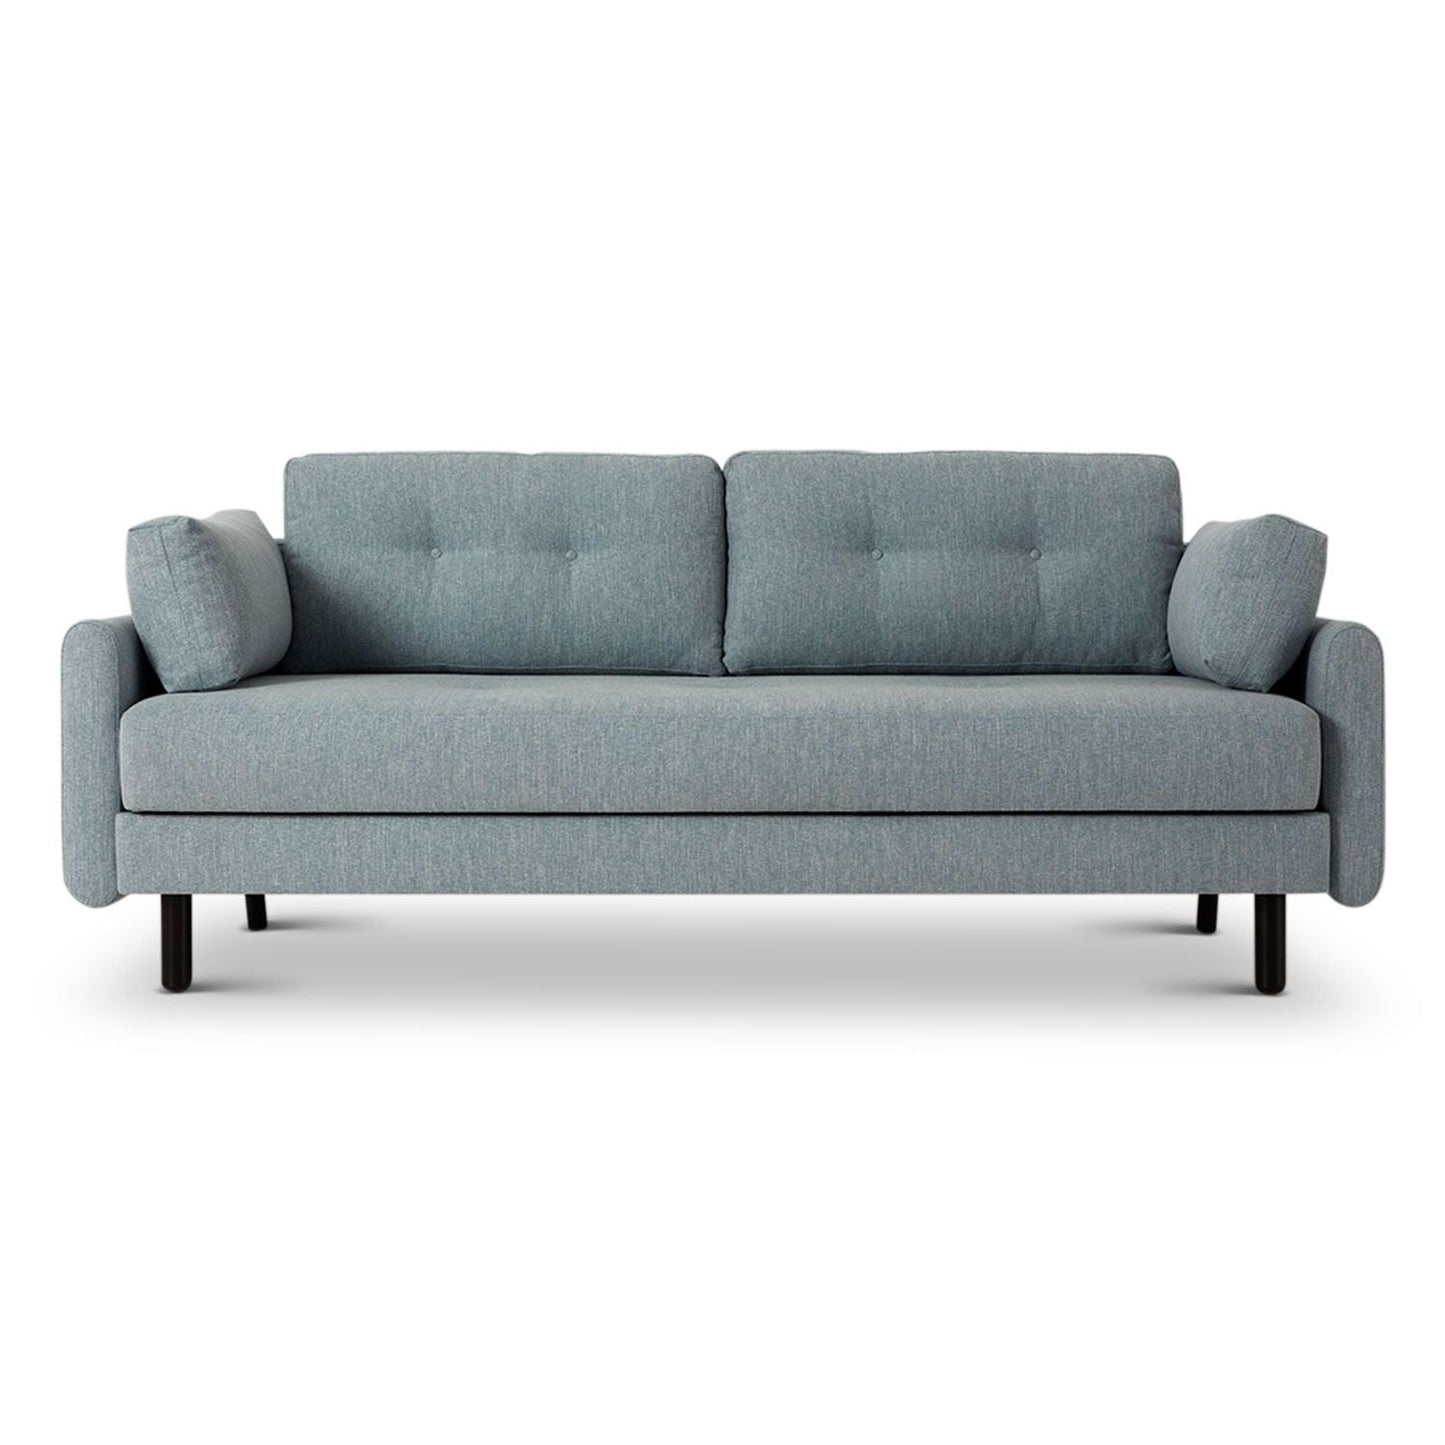 Model 04 Linen 3 Seat Sofa Bed